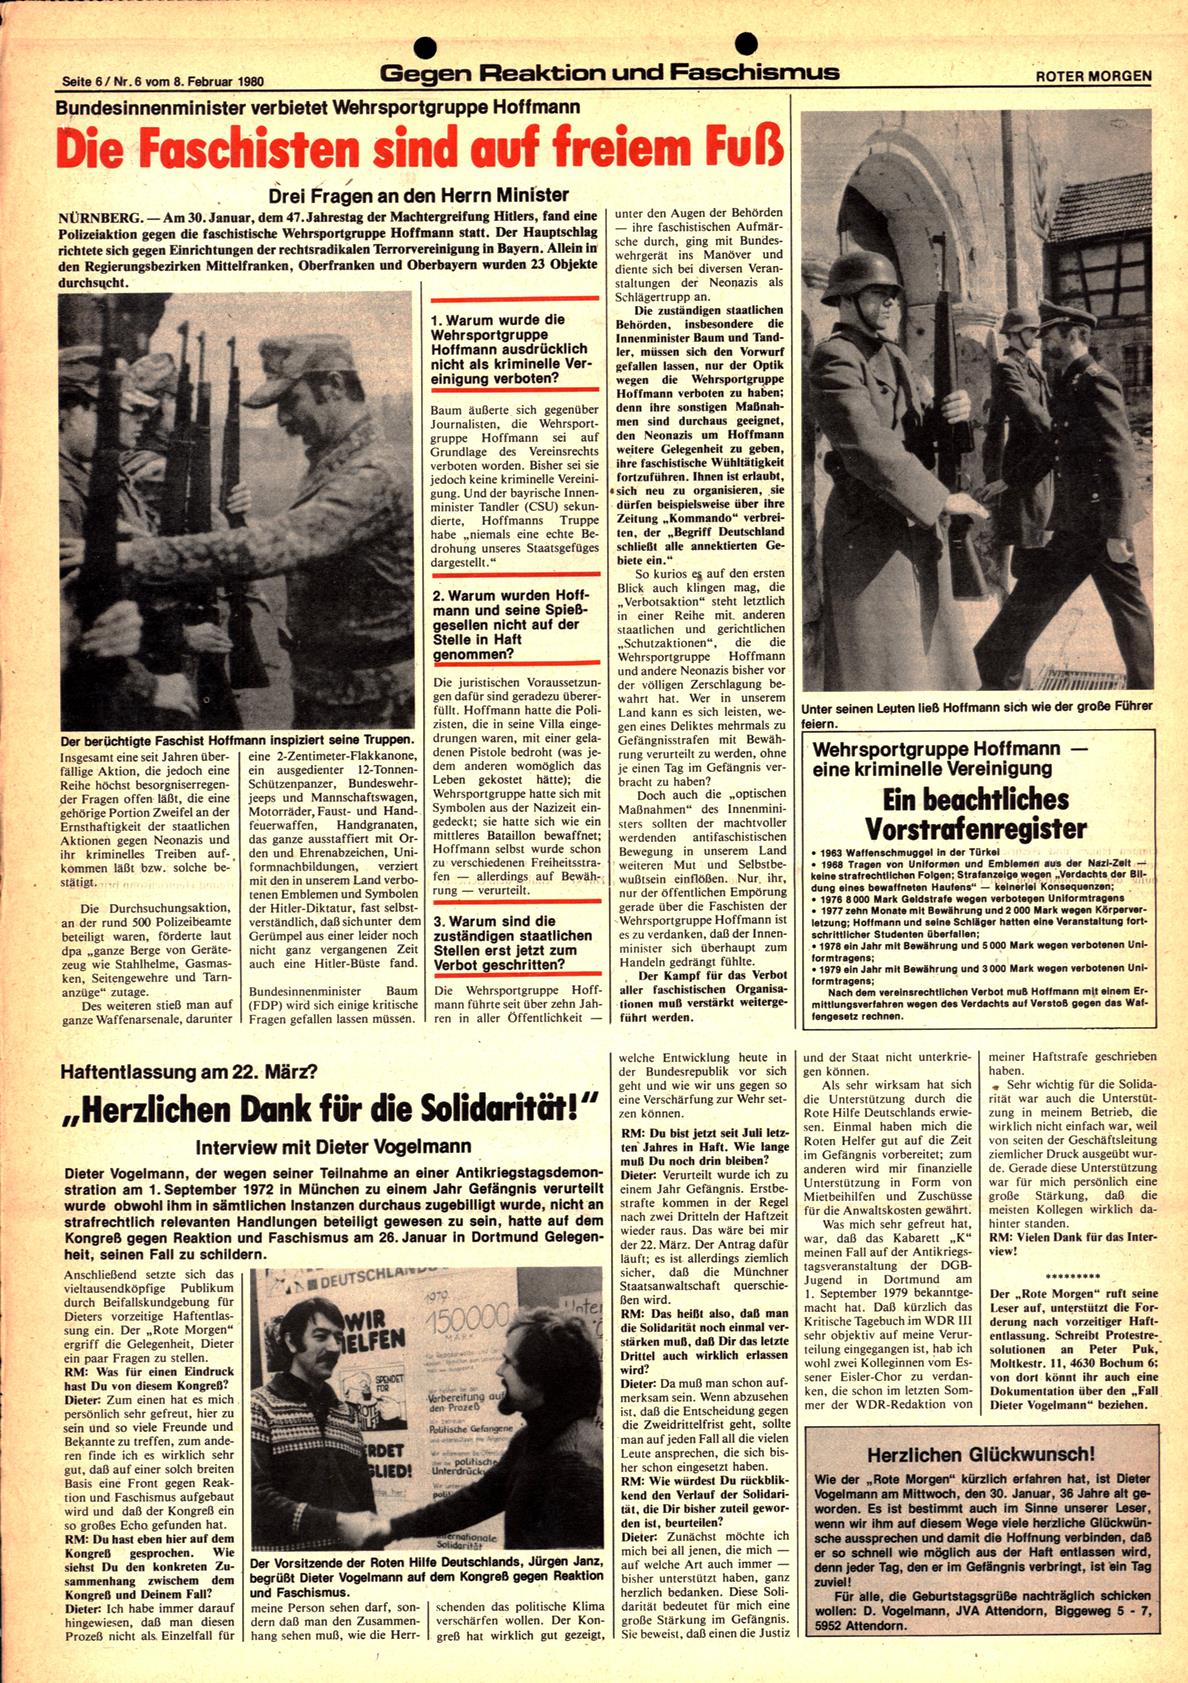 Roter Morgen, 14. Jg., 8. Februar 1980, Nr. 6, Seite 6